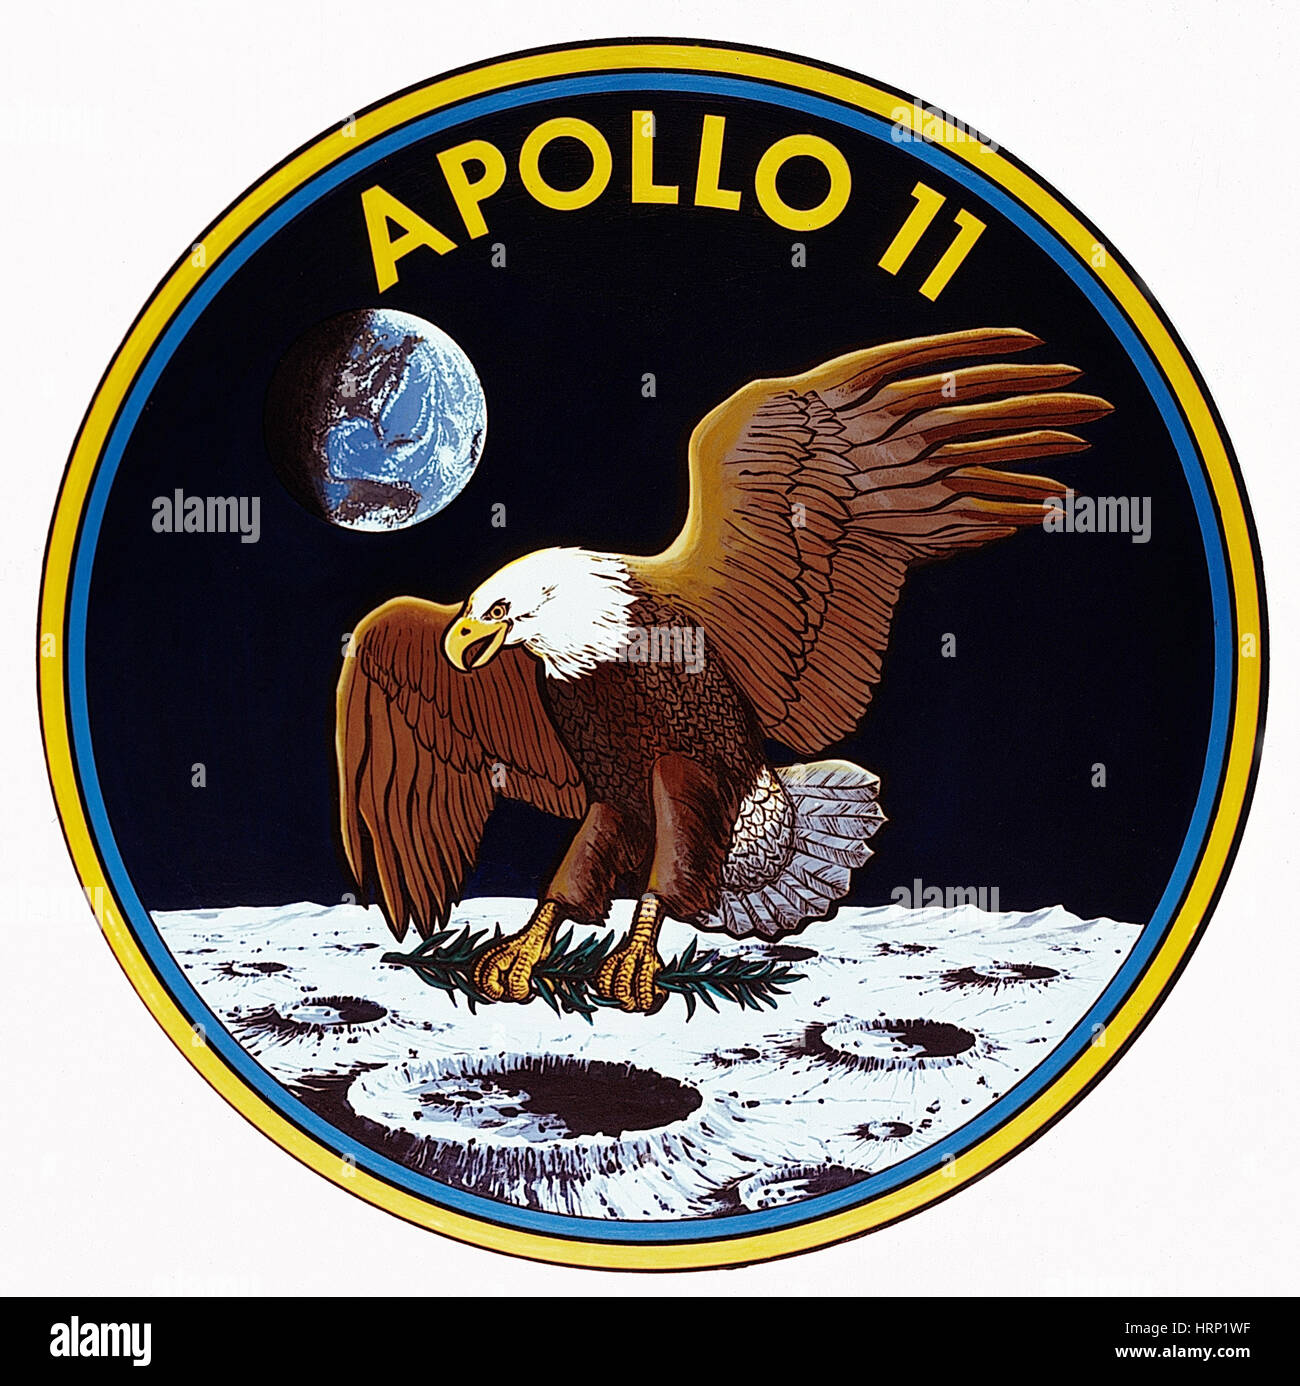 Apollo 11 Mission Patch Stockfoto